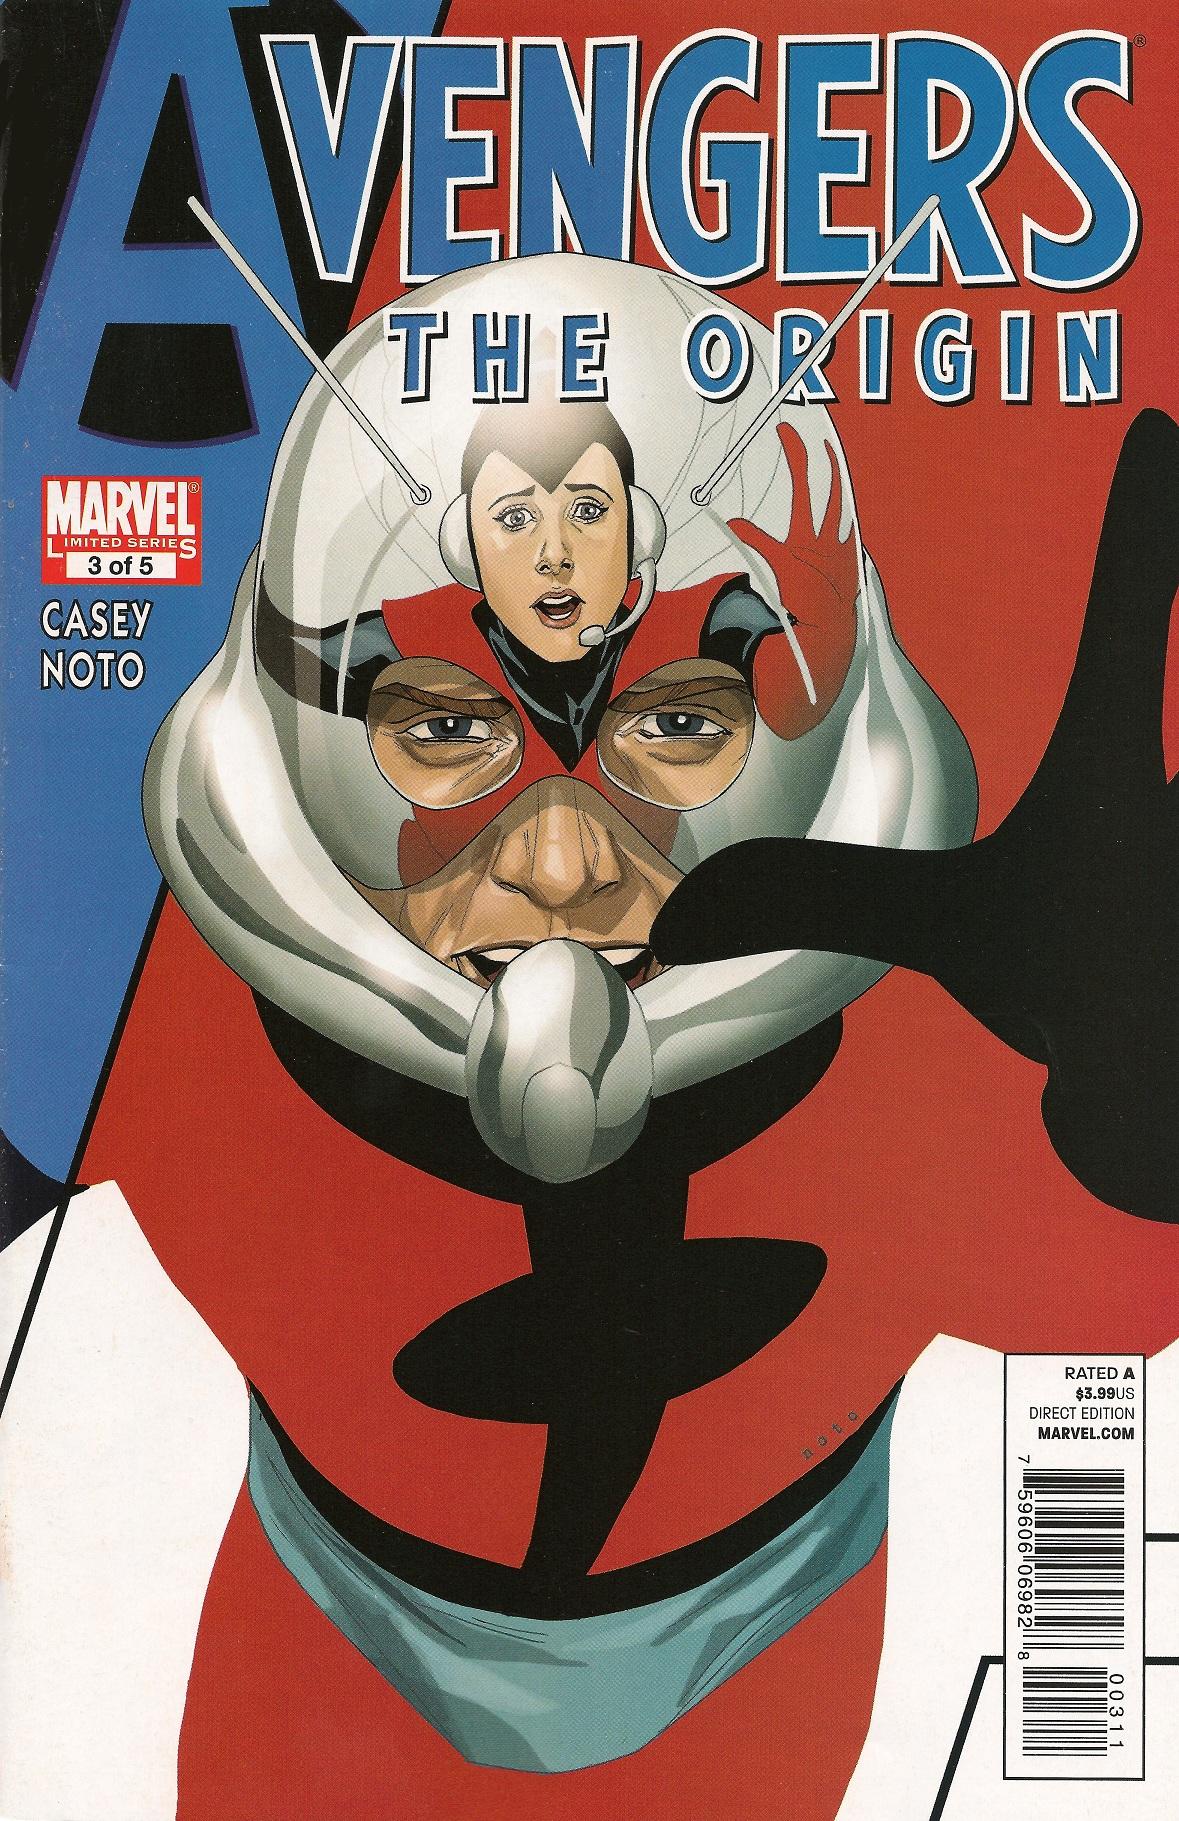 Avengers: The Origin Vol. 1 #3